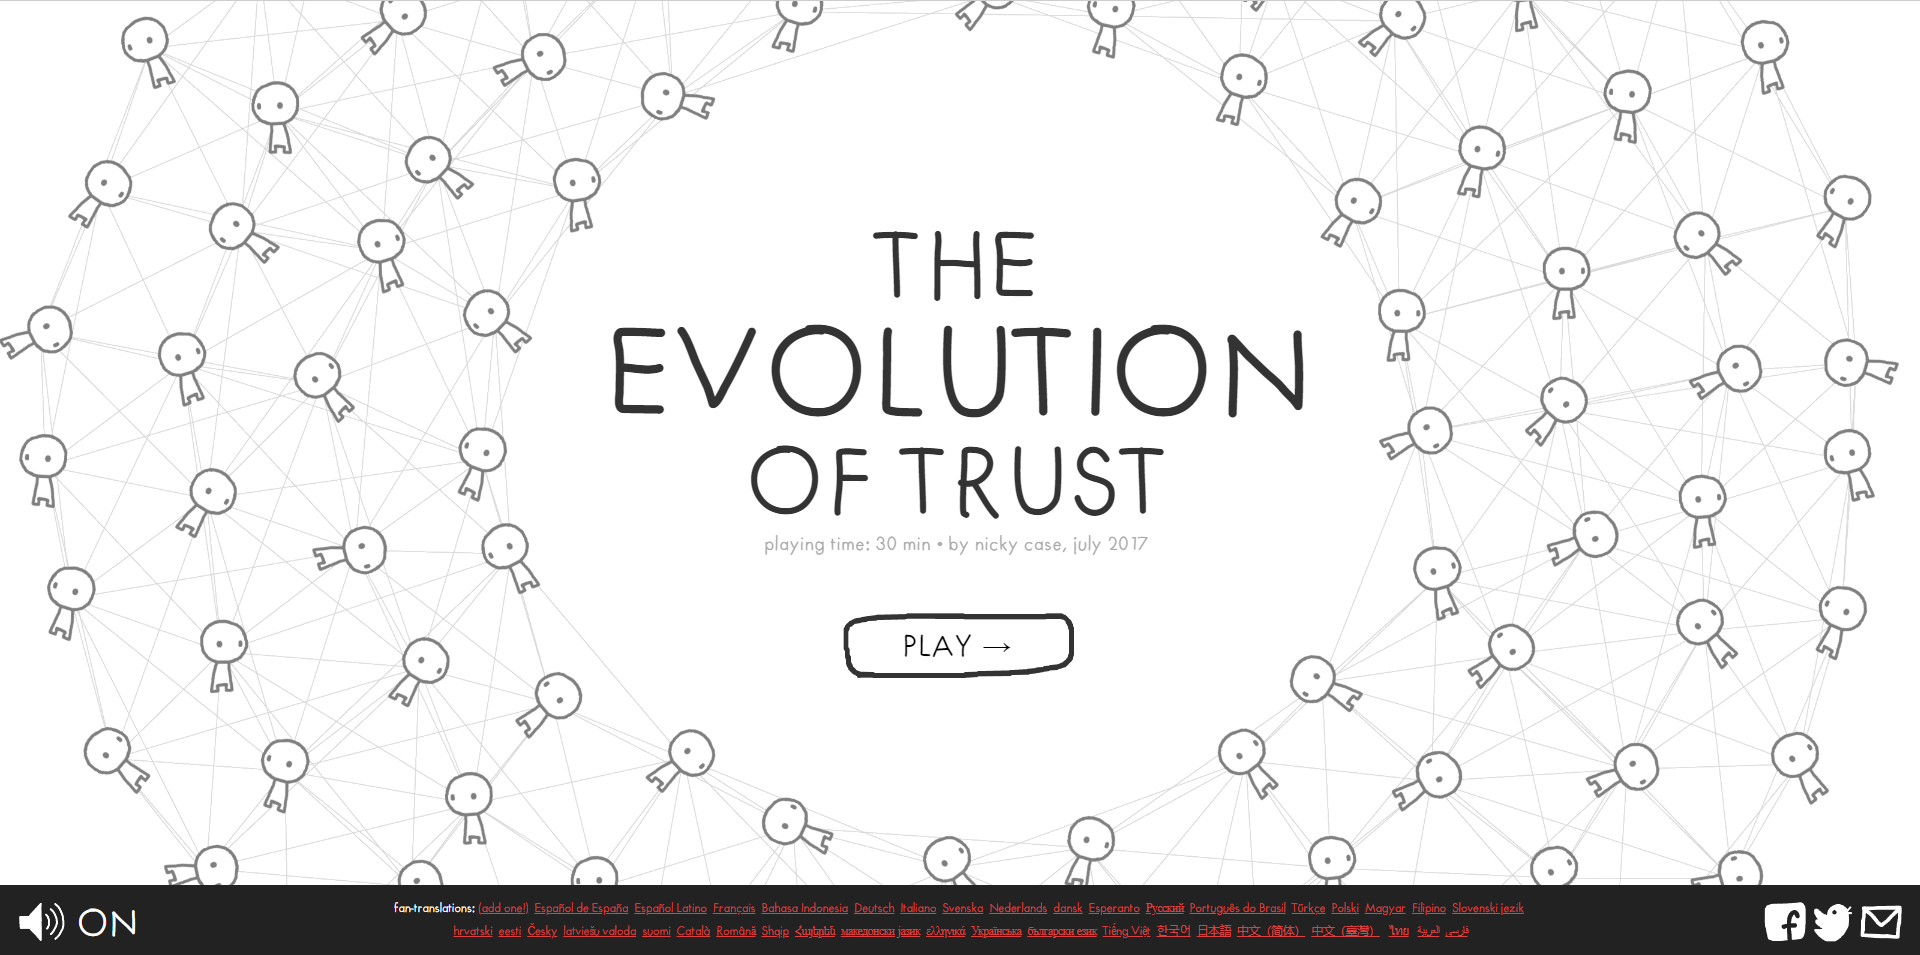 The Evolution of Trust